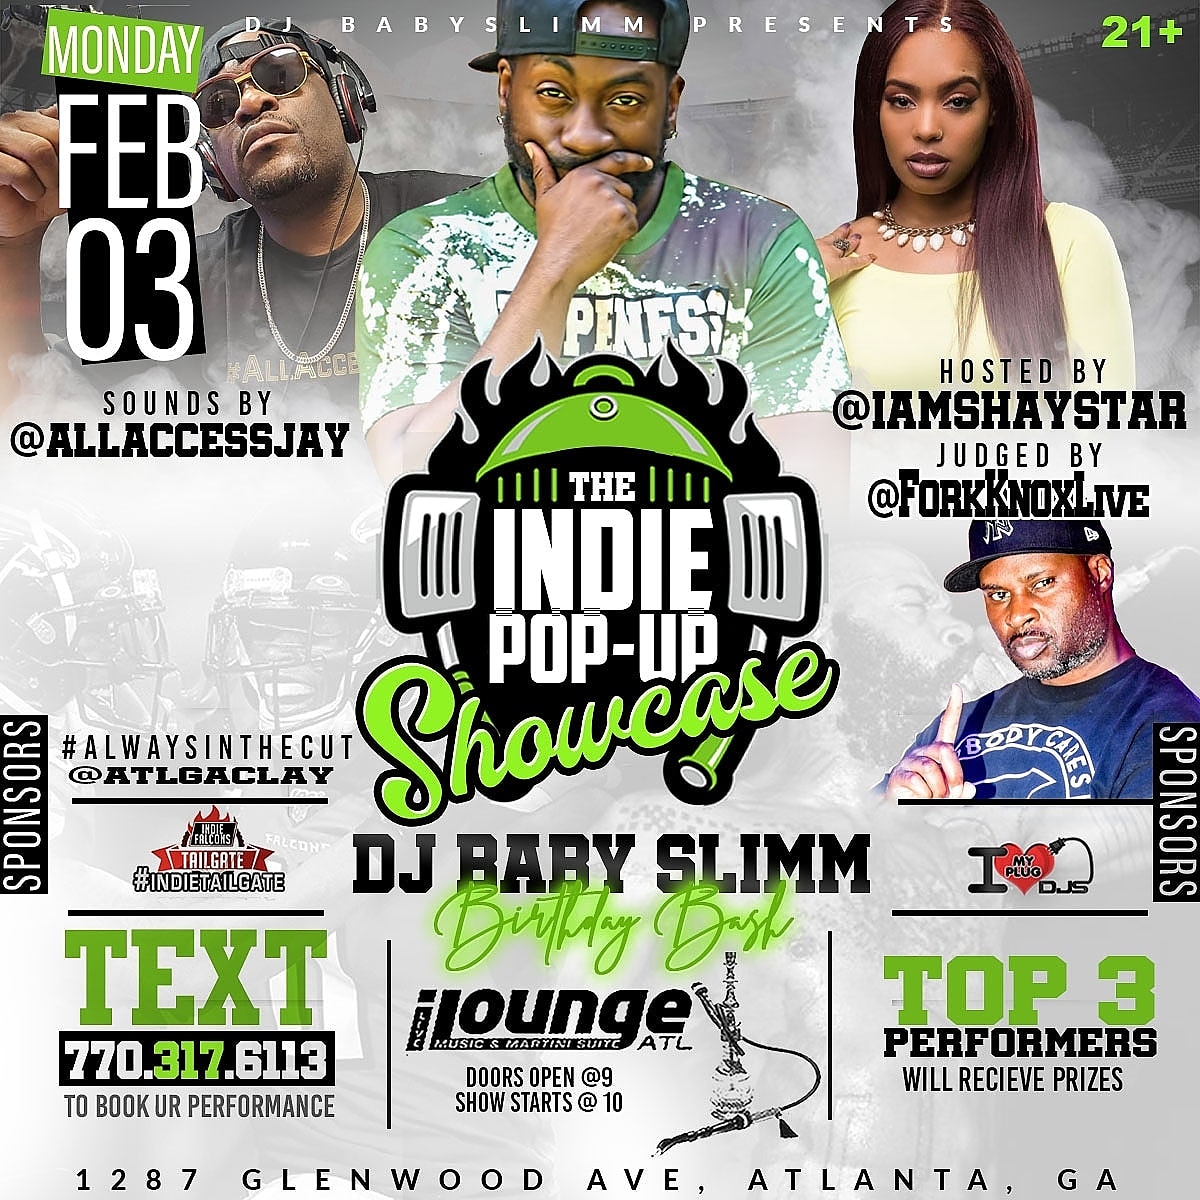 [Event] The Indie Pop Up Showcase Feb 3rd @ iLounge w/ @djbabyslimm & more! #Atlanta